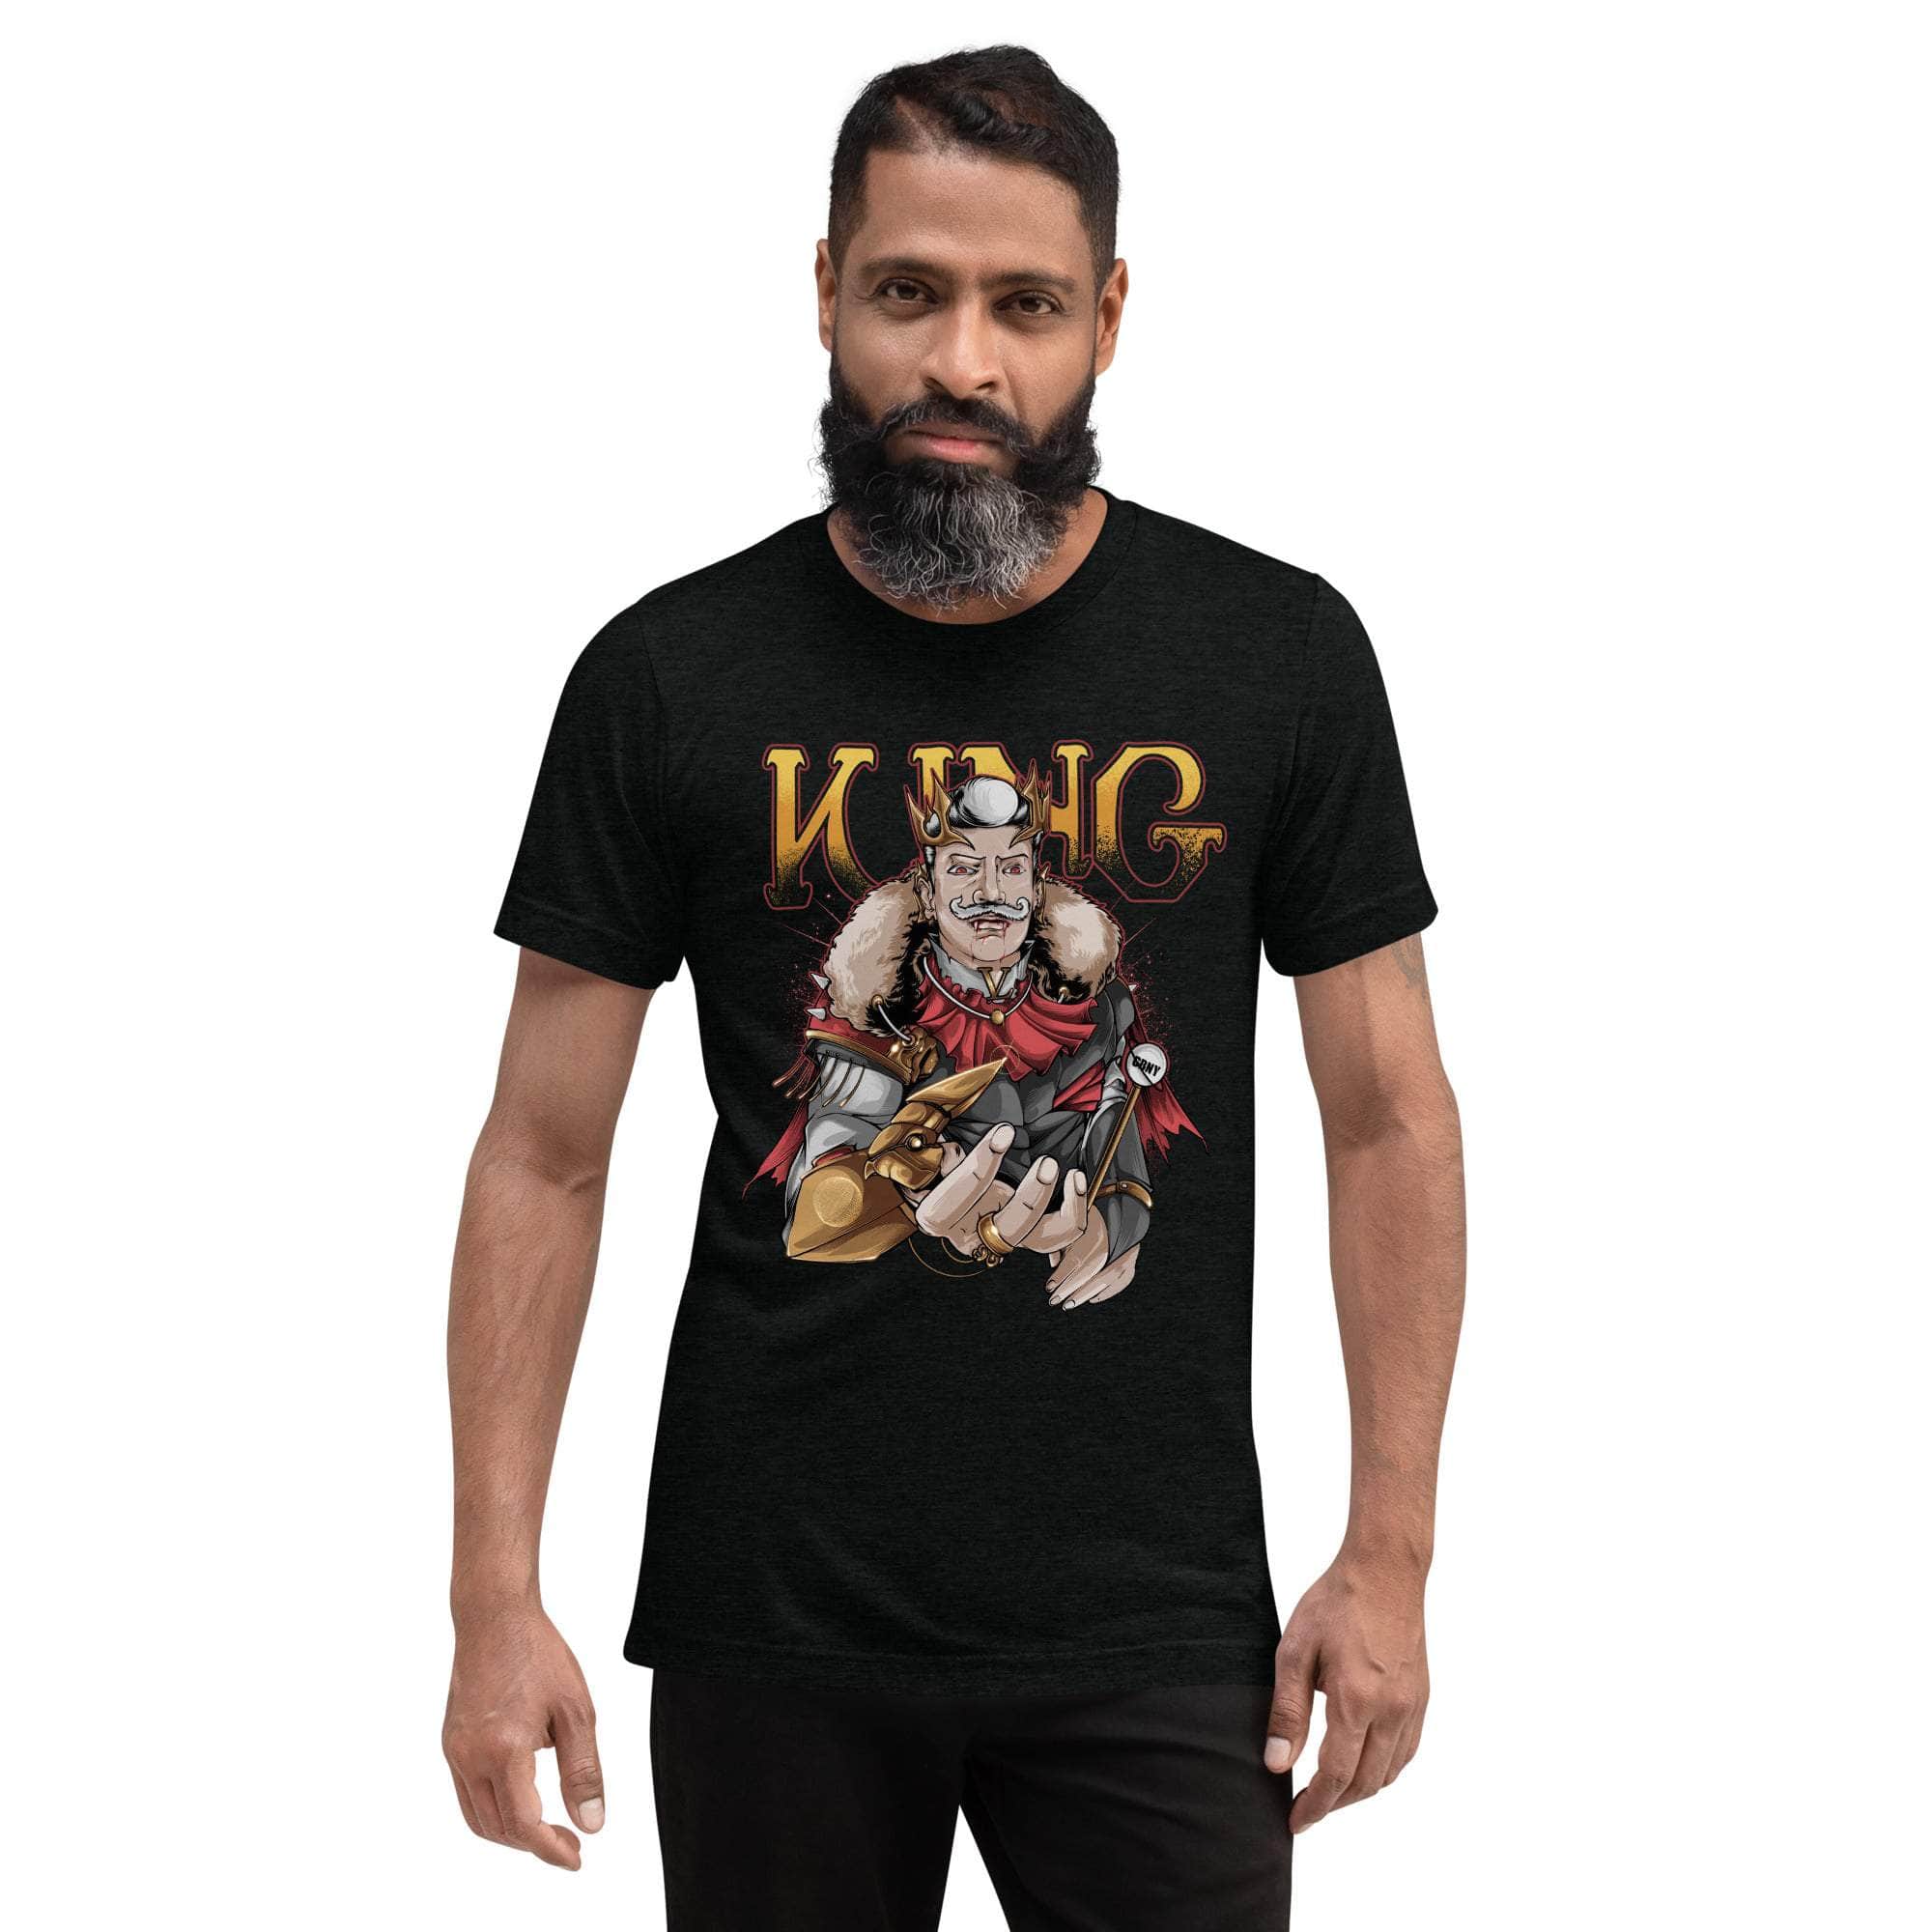 GBNY Vamp Life X GBNY "Vamp King" T-shirt - Men's